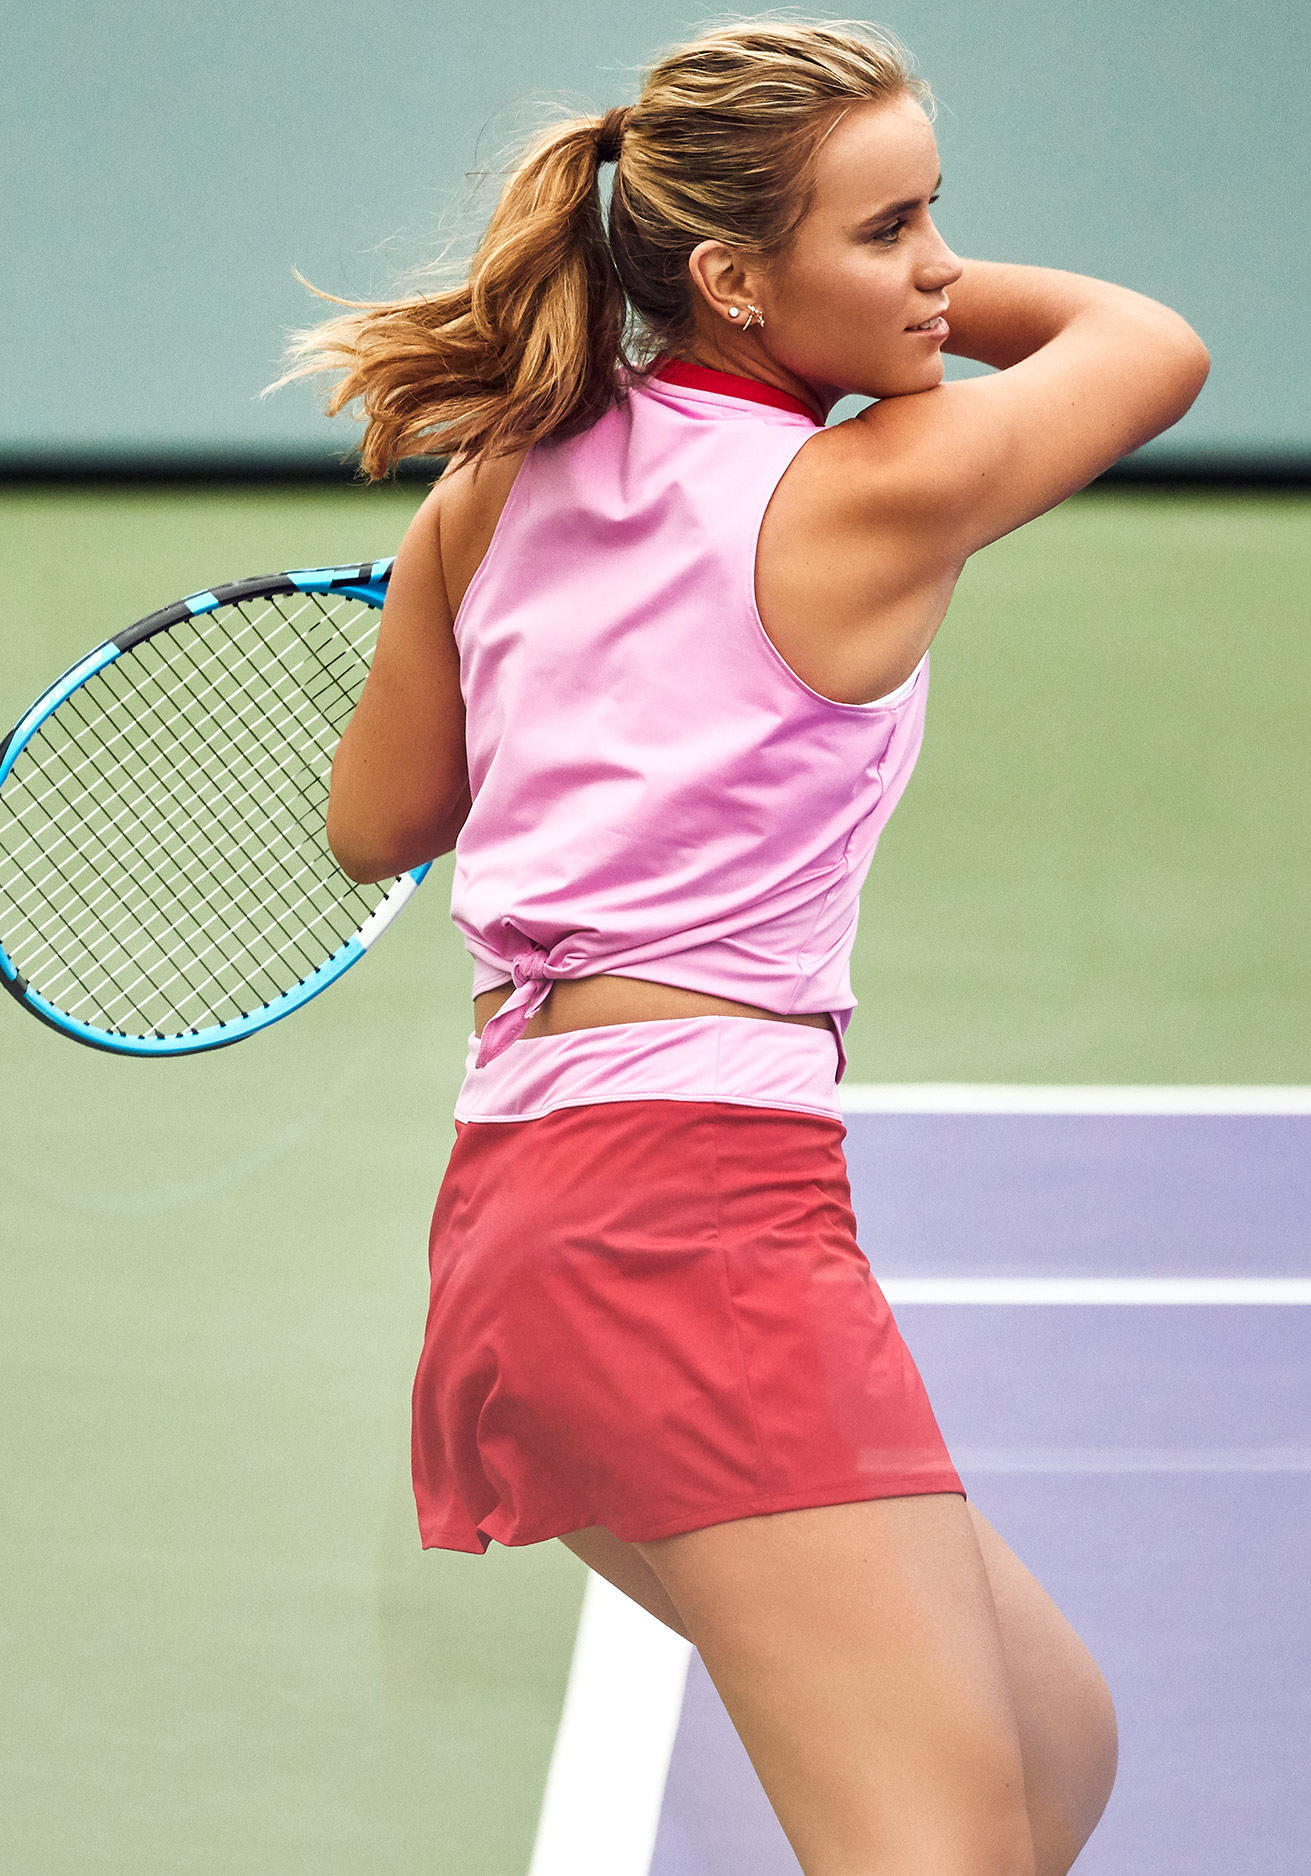 SOFIA KENIN - AMERICAN PROFESSIONAL TENNIS PLAYER